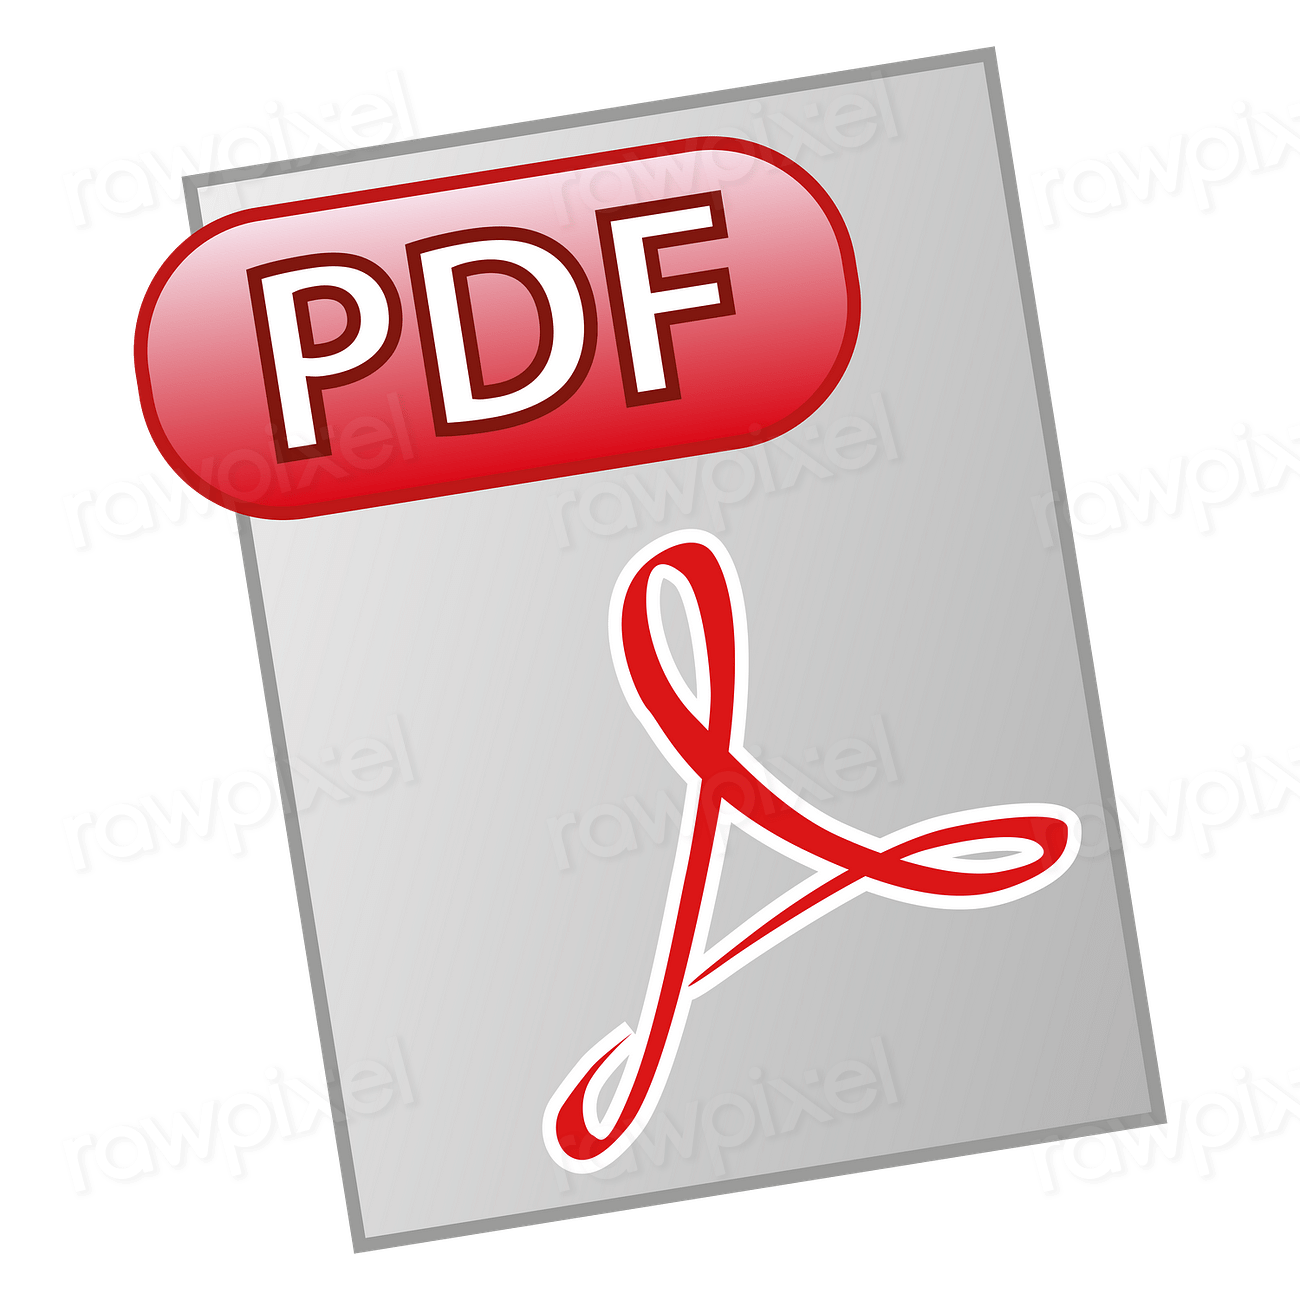 PDF file png sticker, digital